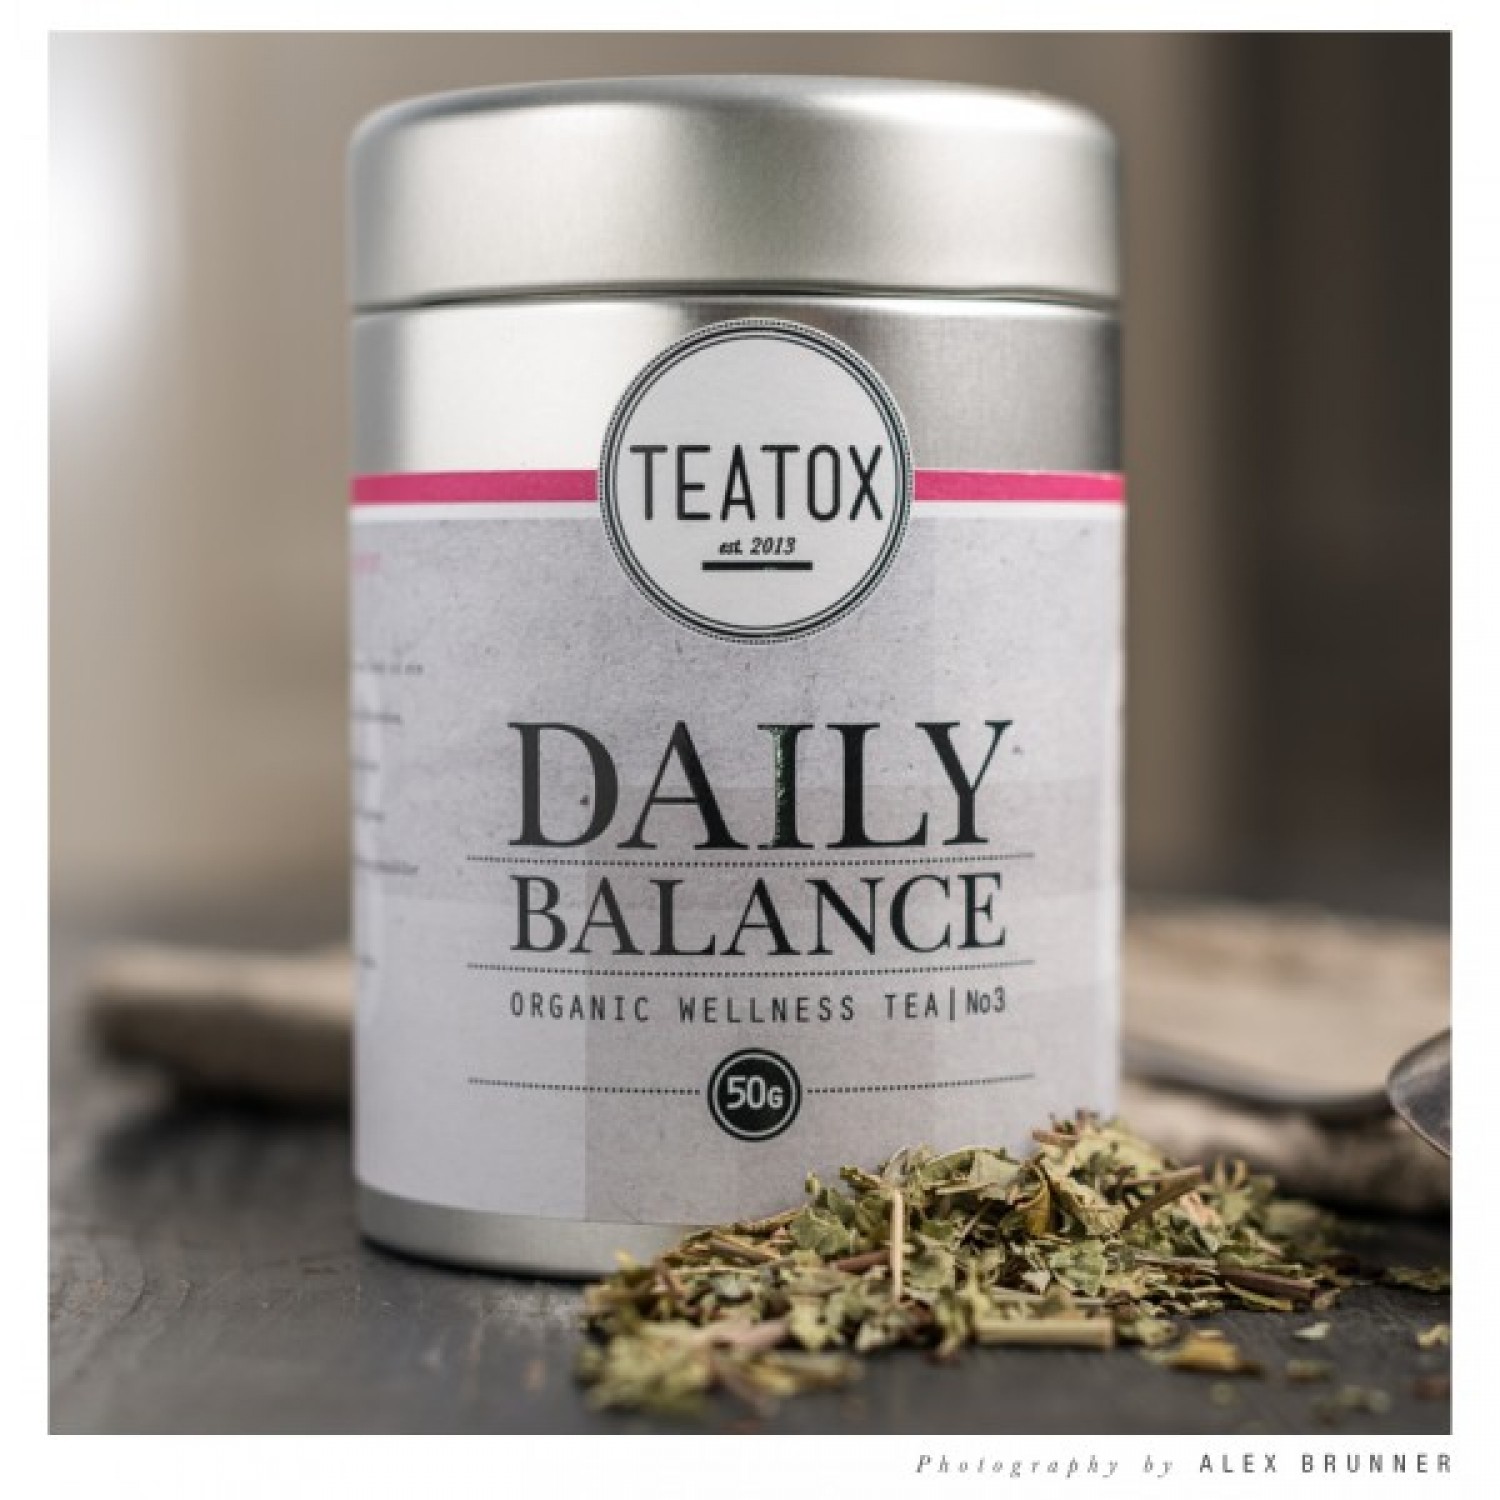 Daily Balance Organic Tea from TEATOX